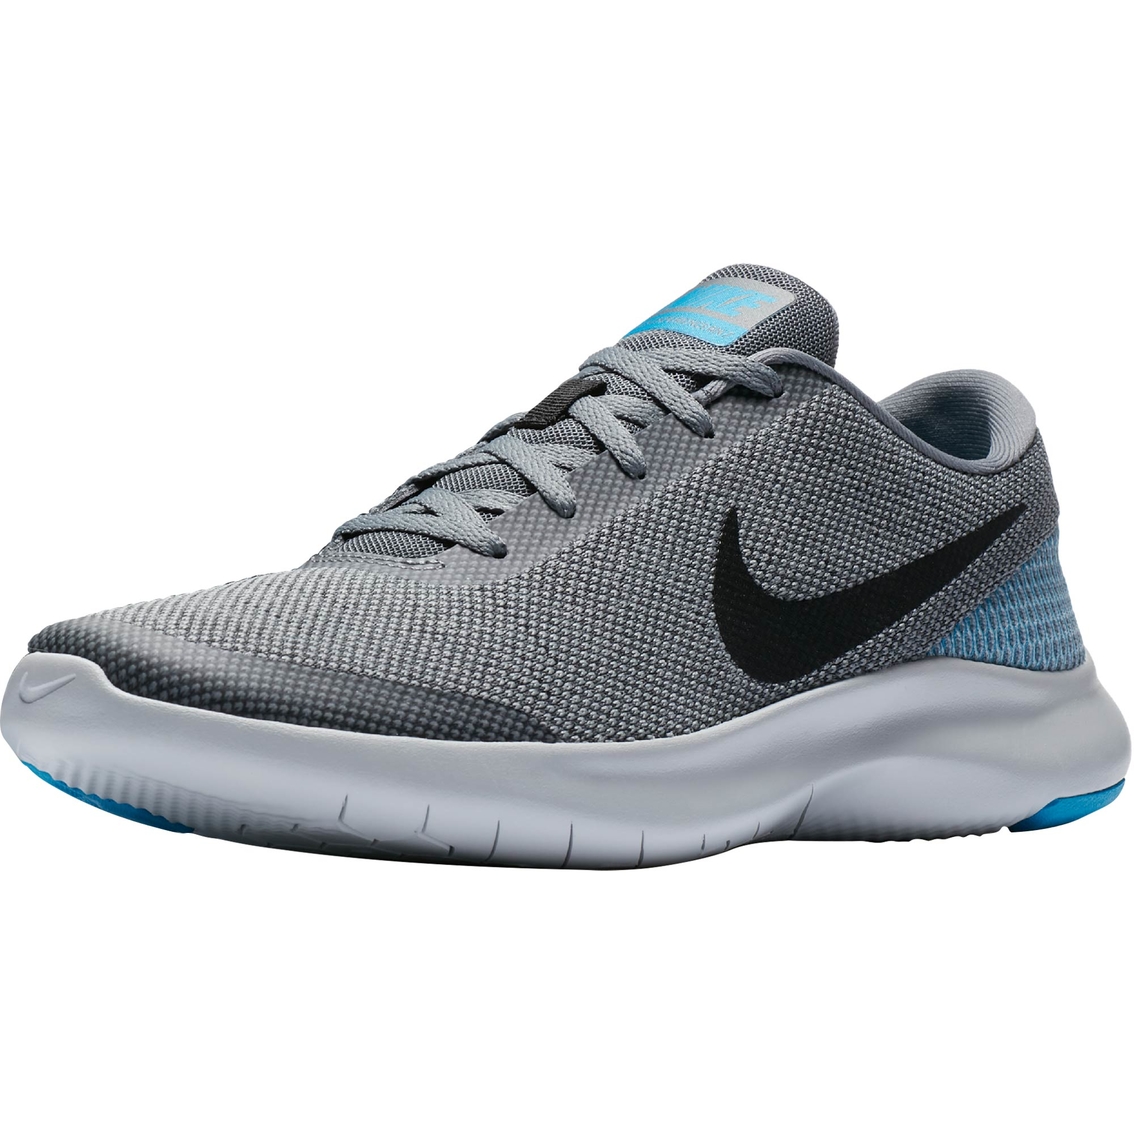 Nike Men's Flex Experience Rn 7 Running Shoes | Running | Shoes | Shop ...